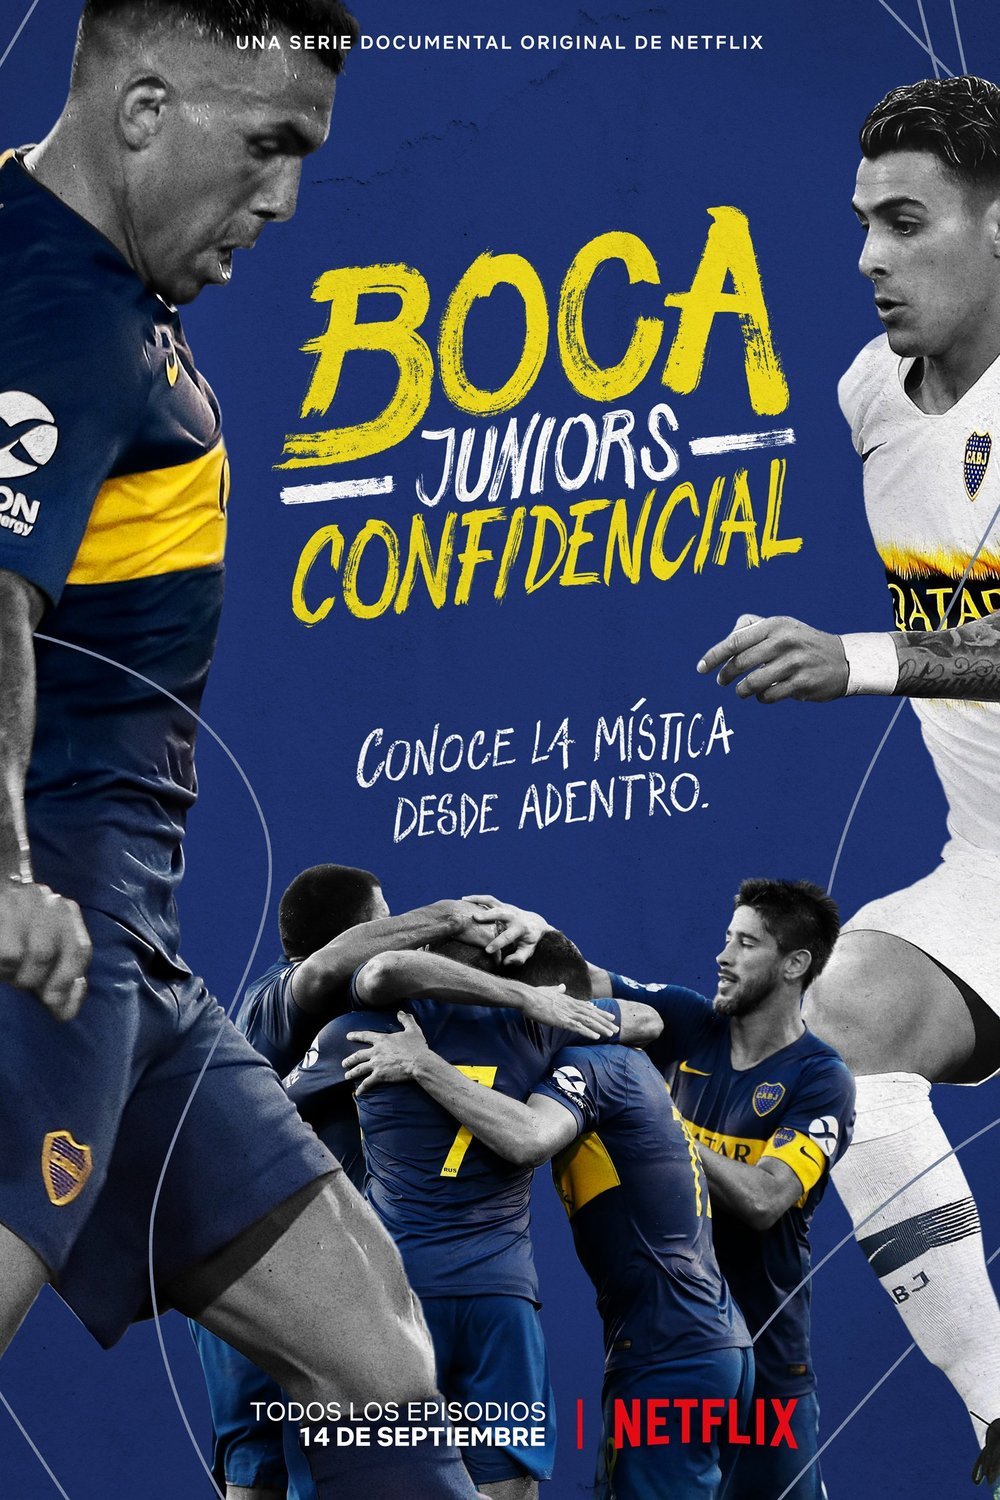 L'affiche originale du film Boca Juniors Confidencial en espagnol